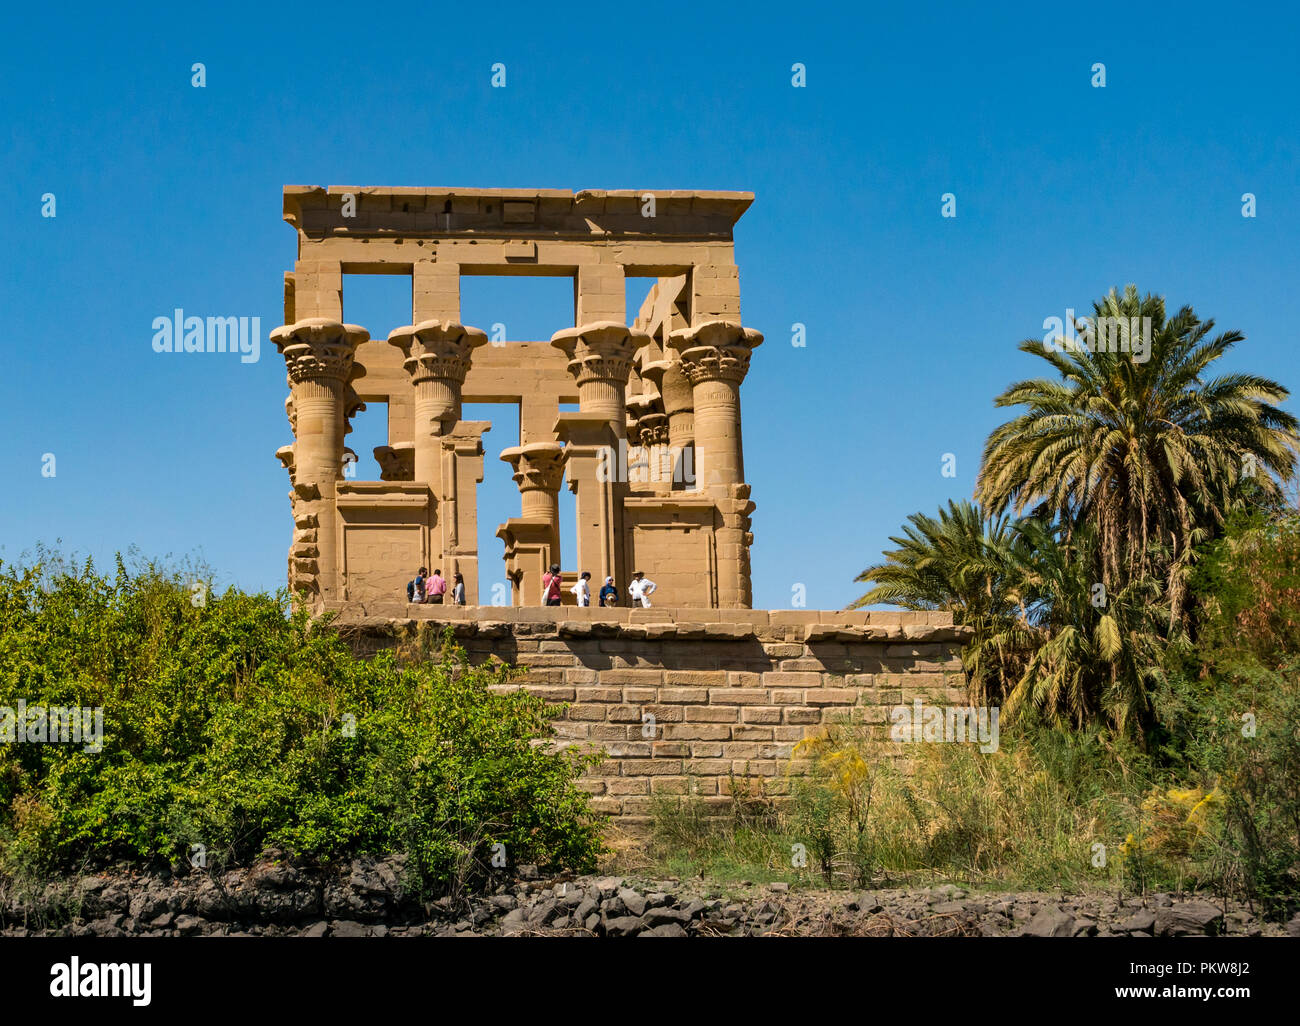 Tourists at Kioske of Phylae, Temple of Philae, Agilkia Island, Lake Nasser, River Nile, Aswan, Egypt, Africa Stock Photo